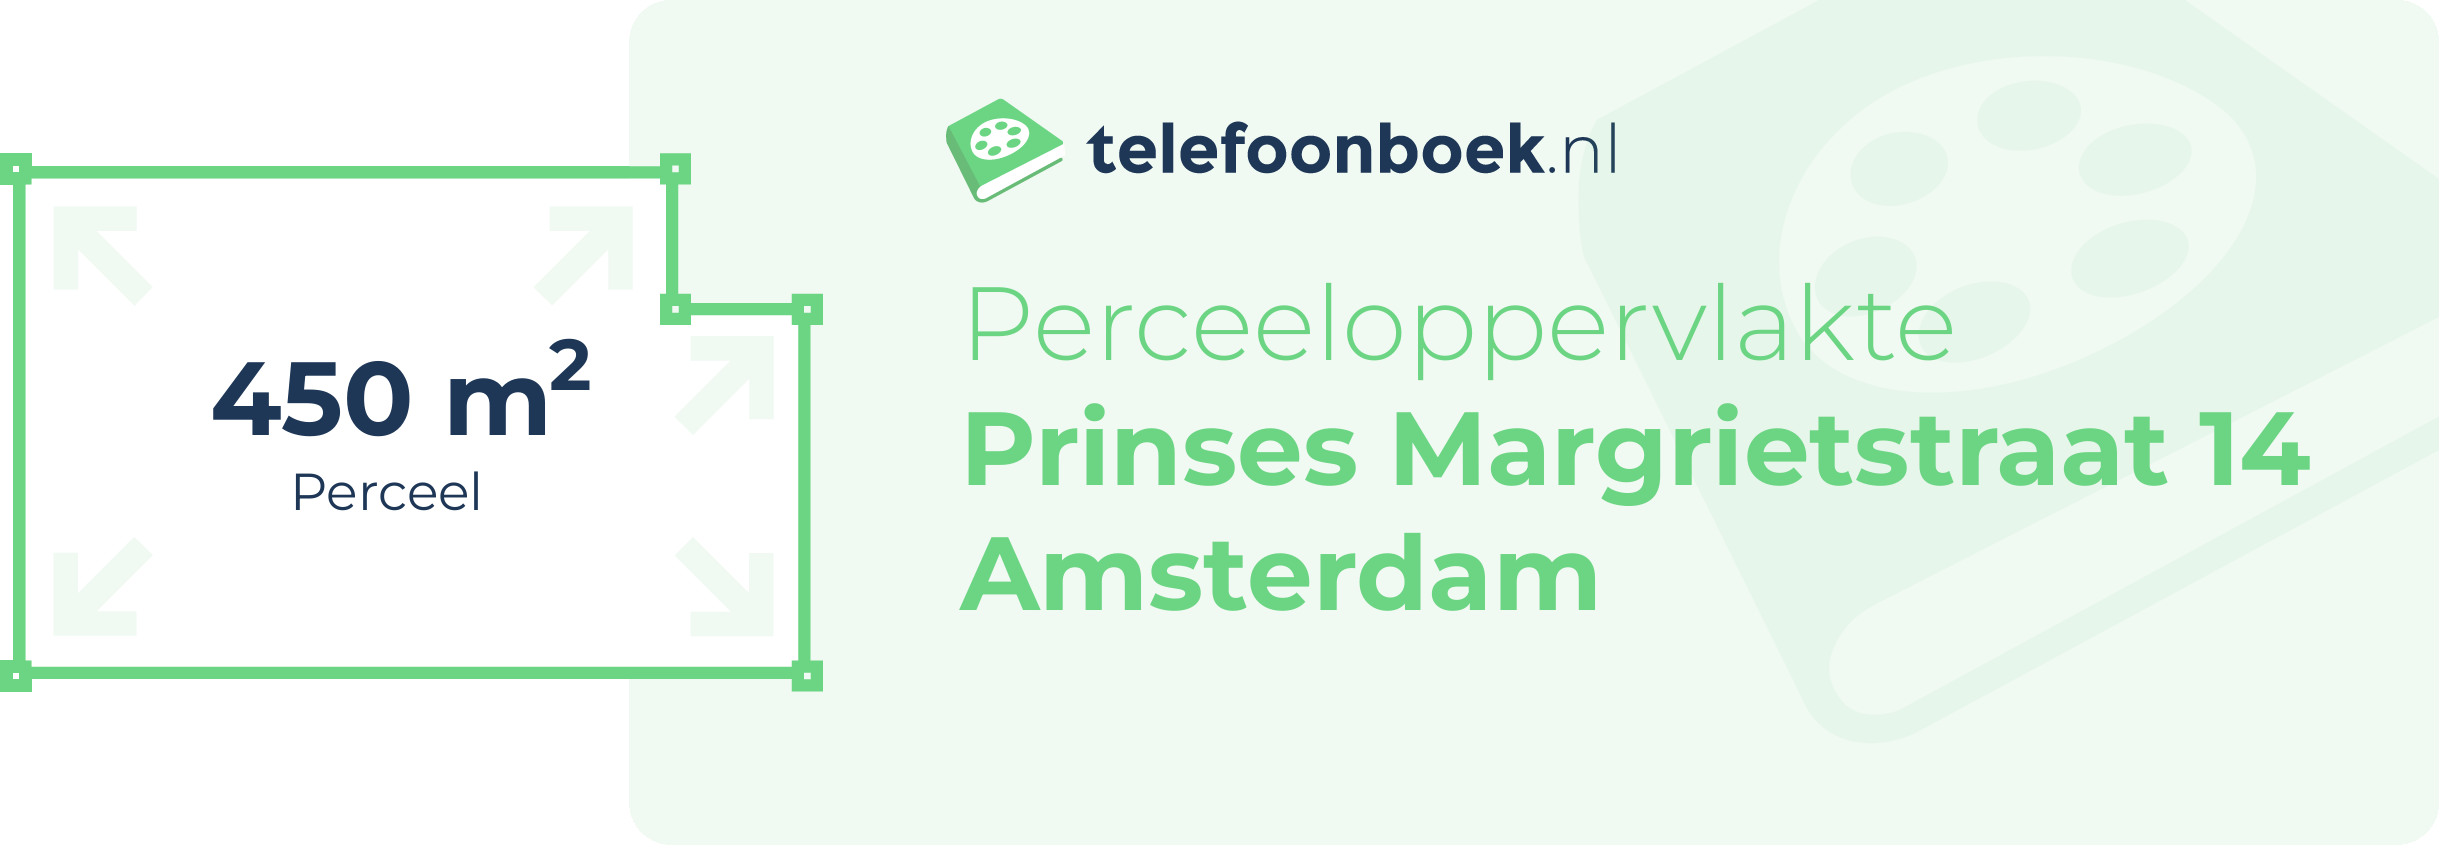 Perceeloppervlakte Prinses Margrietstraat 14 Amsterdam